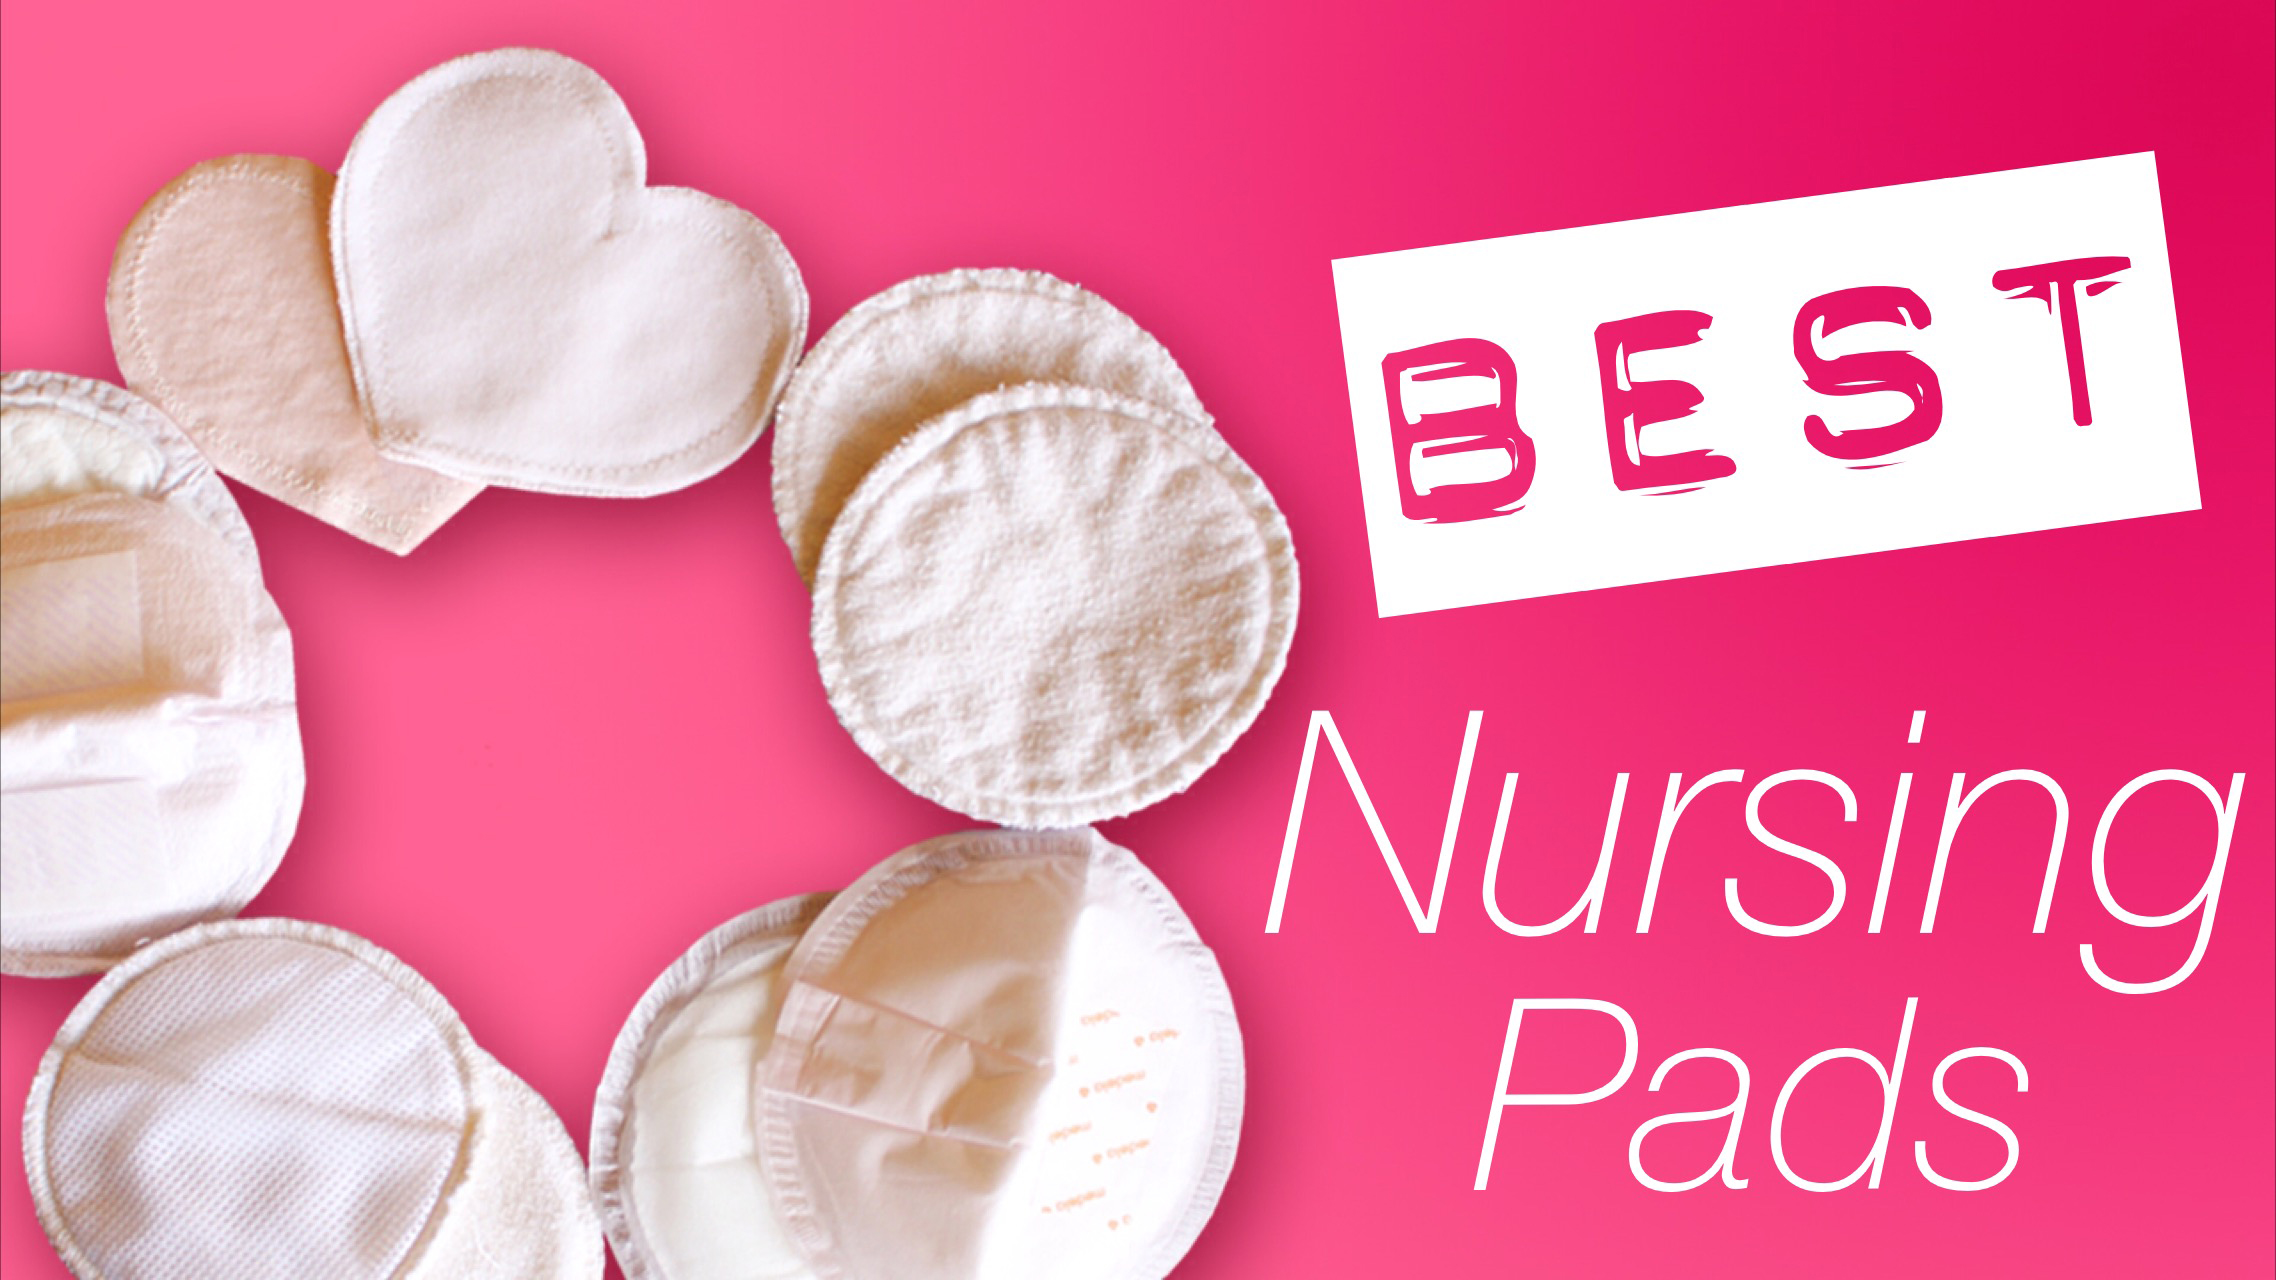 Best nursing pads